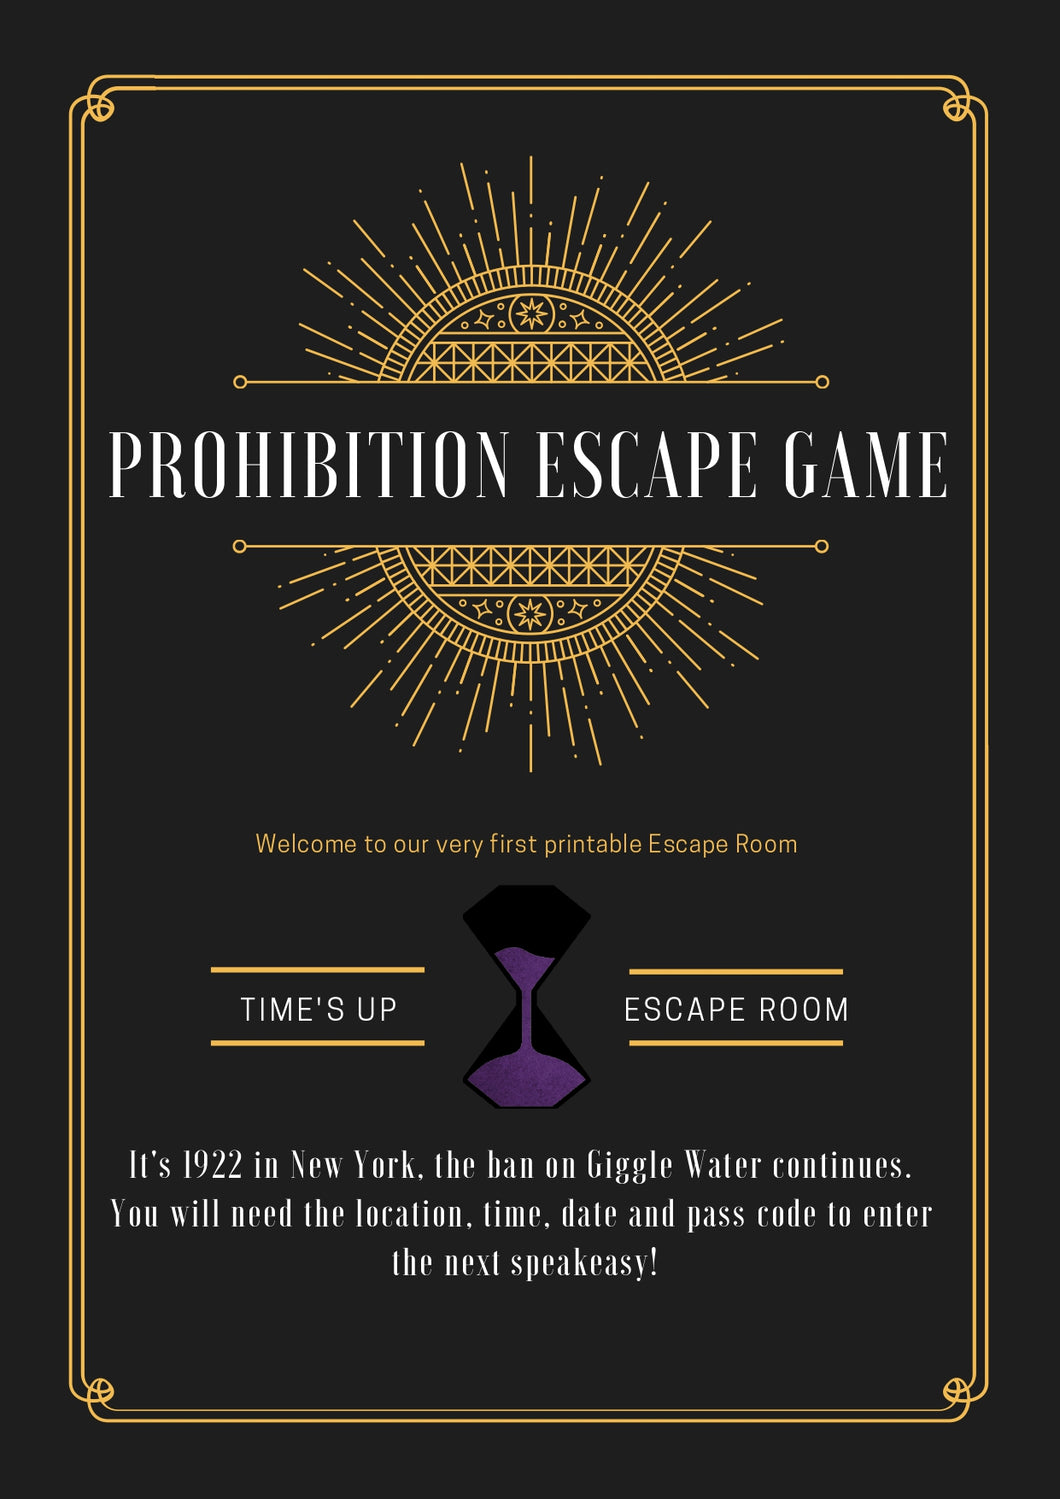 Indoors Prohibition Escape Room